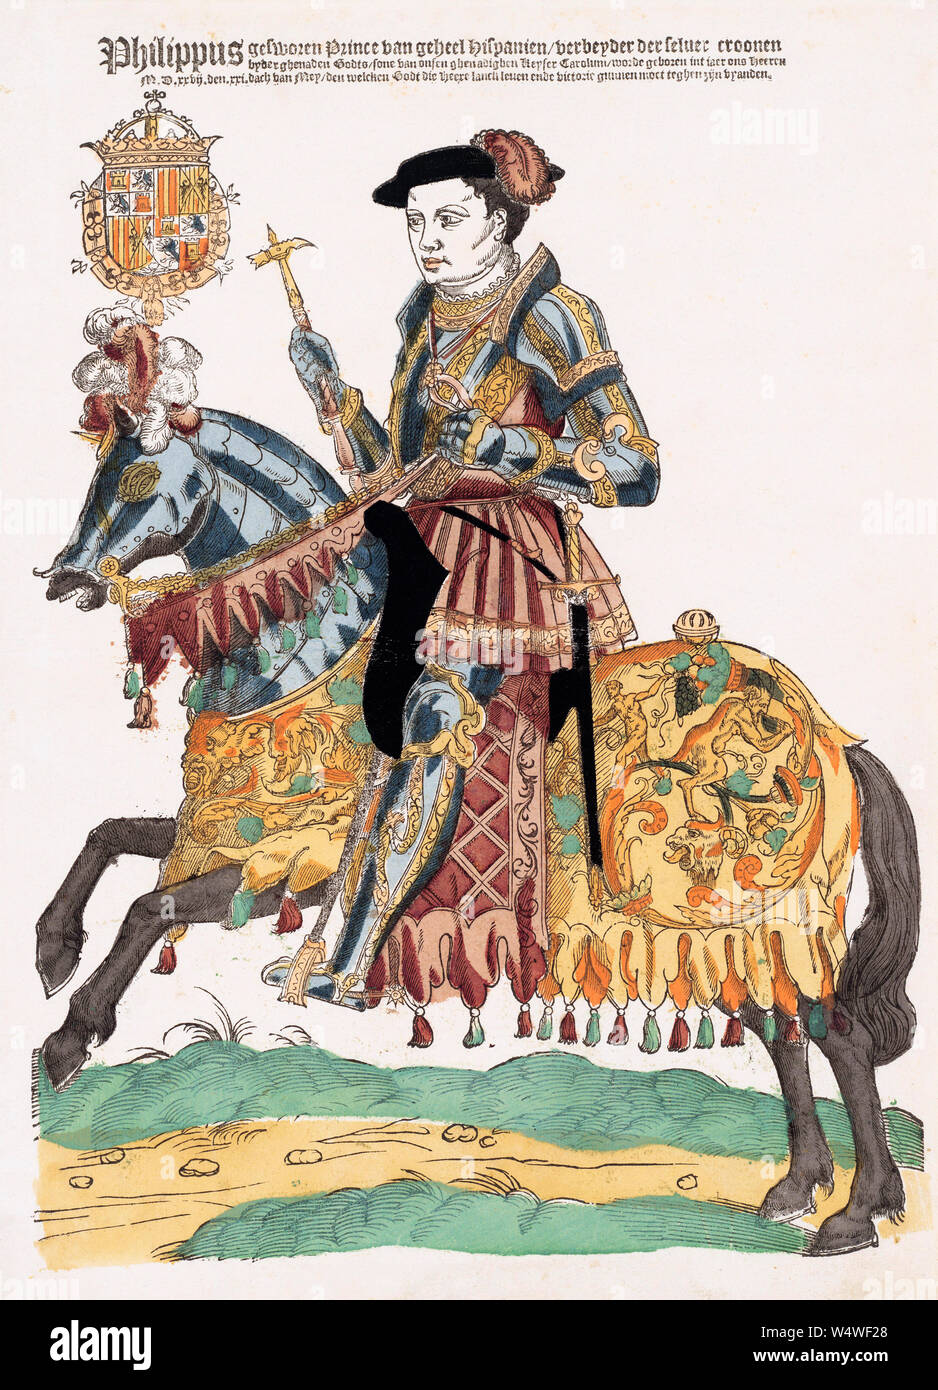 Portrait of King Philip II of Spain on horseback.  King Philip II, Rey Felipe II, 1527 - 1598.  After a 16th century print. Stock Photo